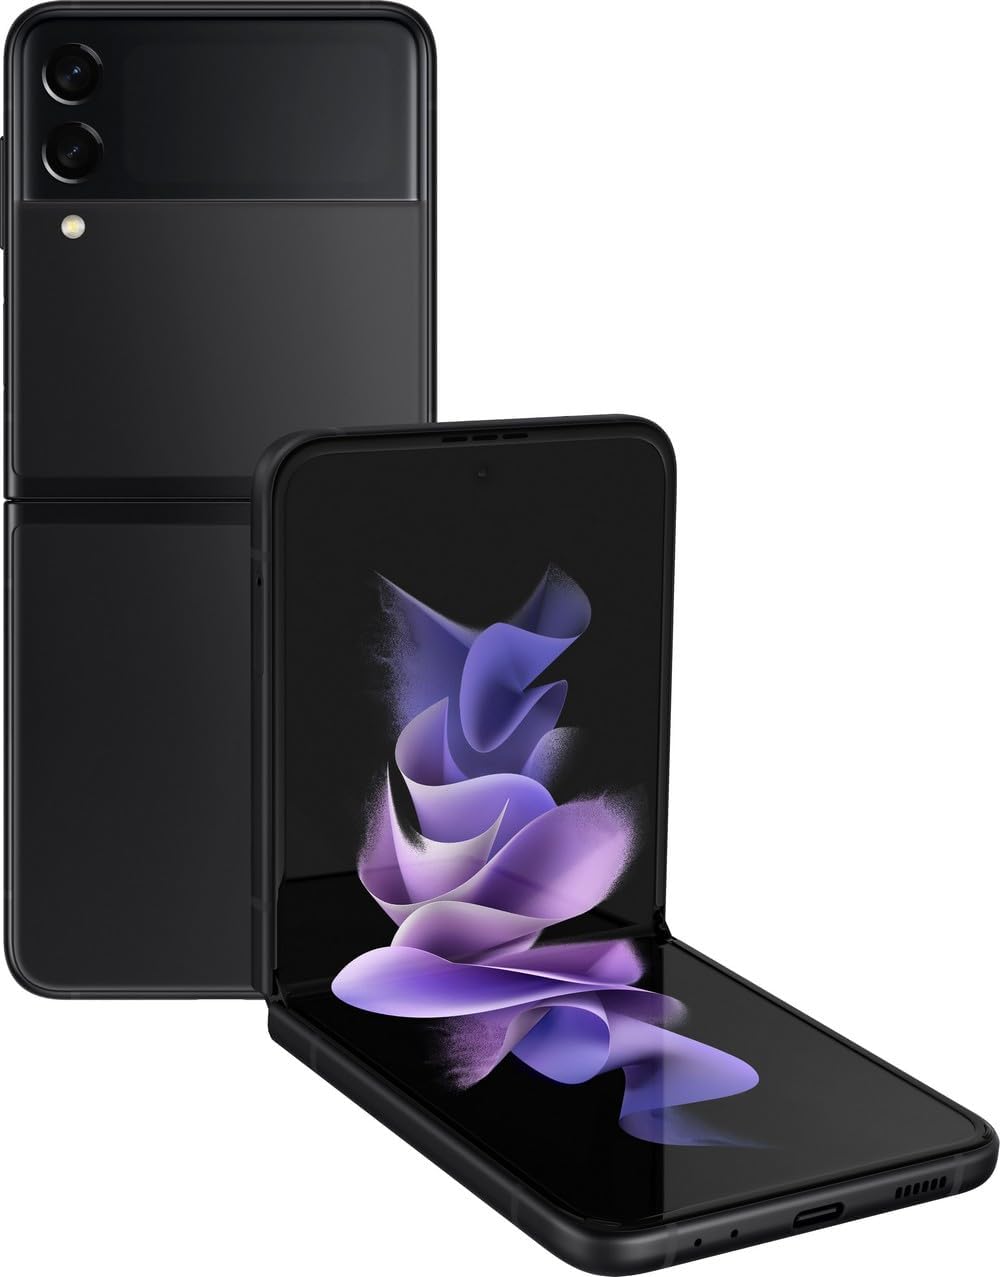 Samsung Galaxy Z Flip3 Cellphone - 128GB (Unlocked) - Phantom Black (Used)